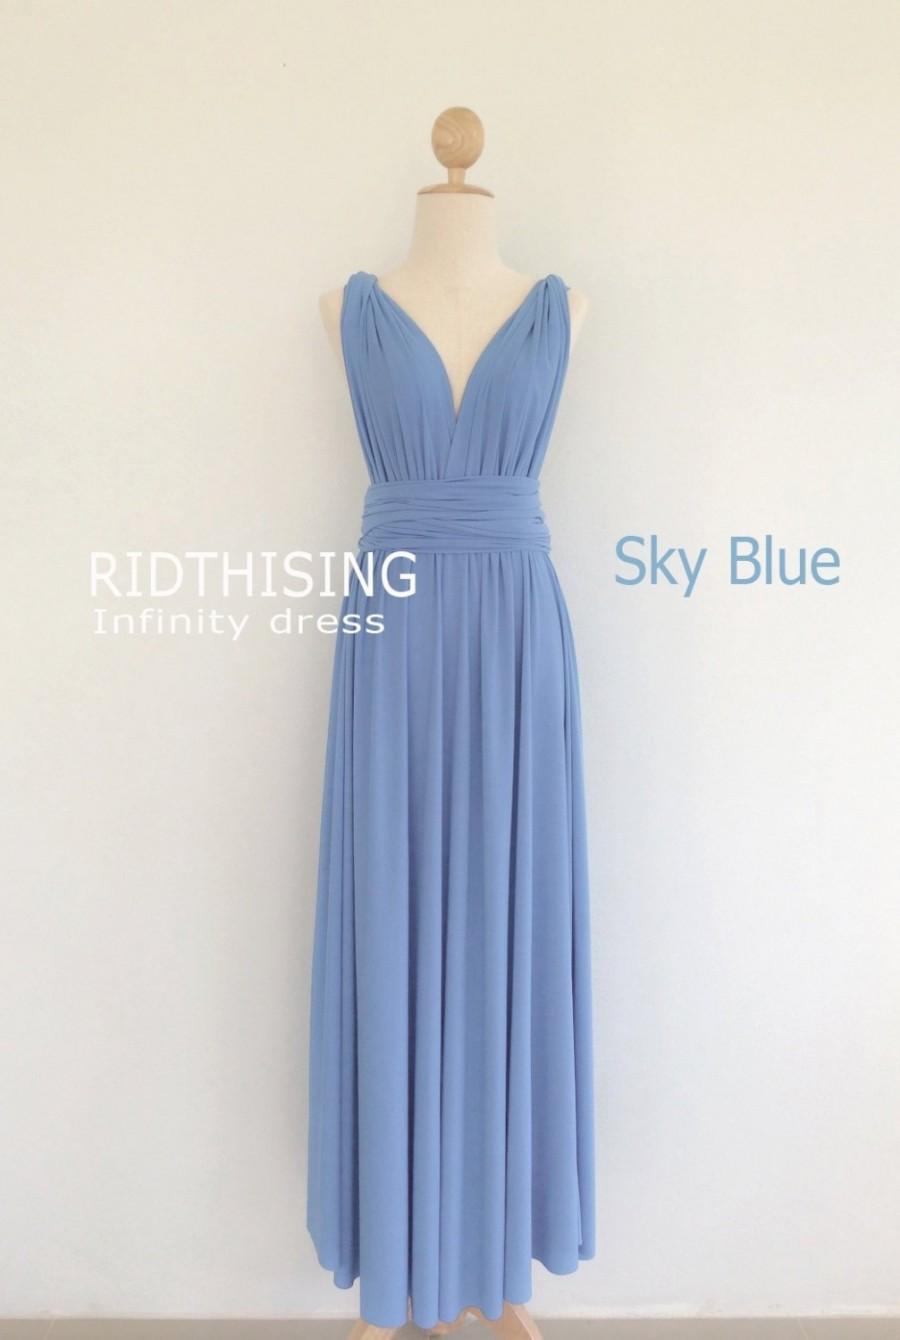 Mariage - Maxi Sky Blue Infinity Dress Bridesmaid Dress Prom Dress Convertible Dress Wrap Dress